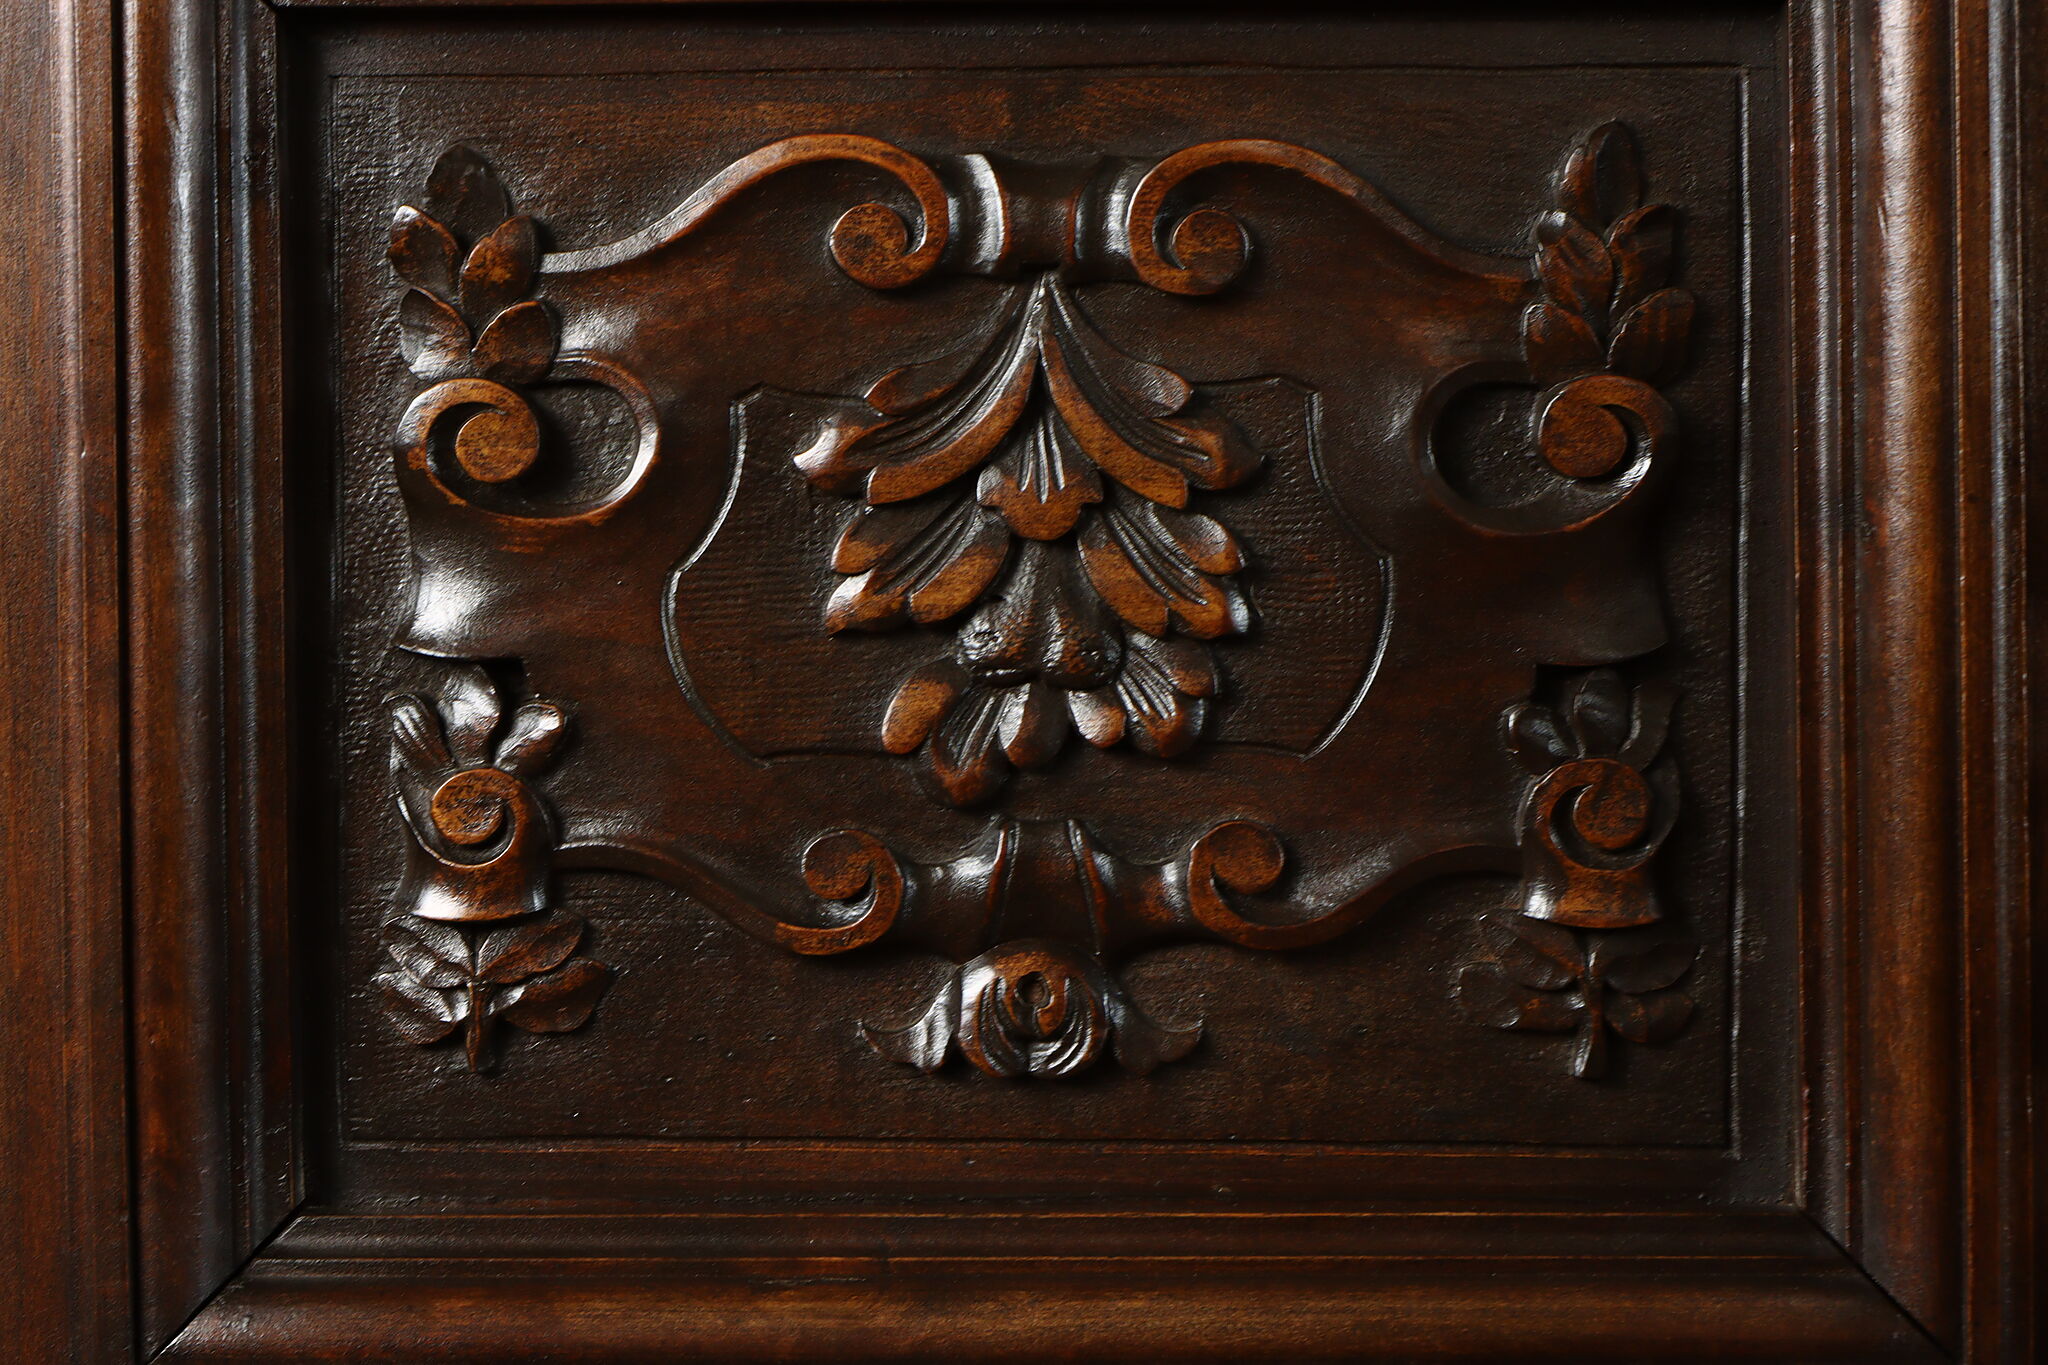 Italian Renaissance Antique Carved Fruitwood Armoire, Wardrobe or Closet